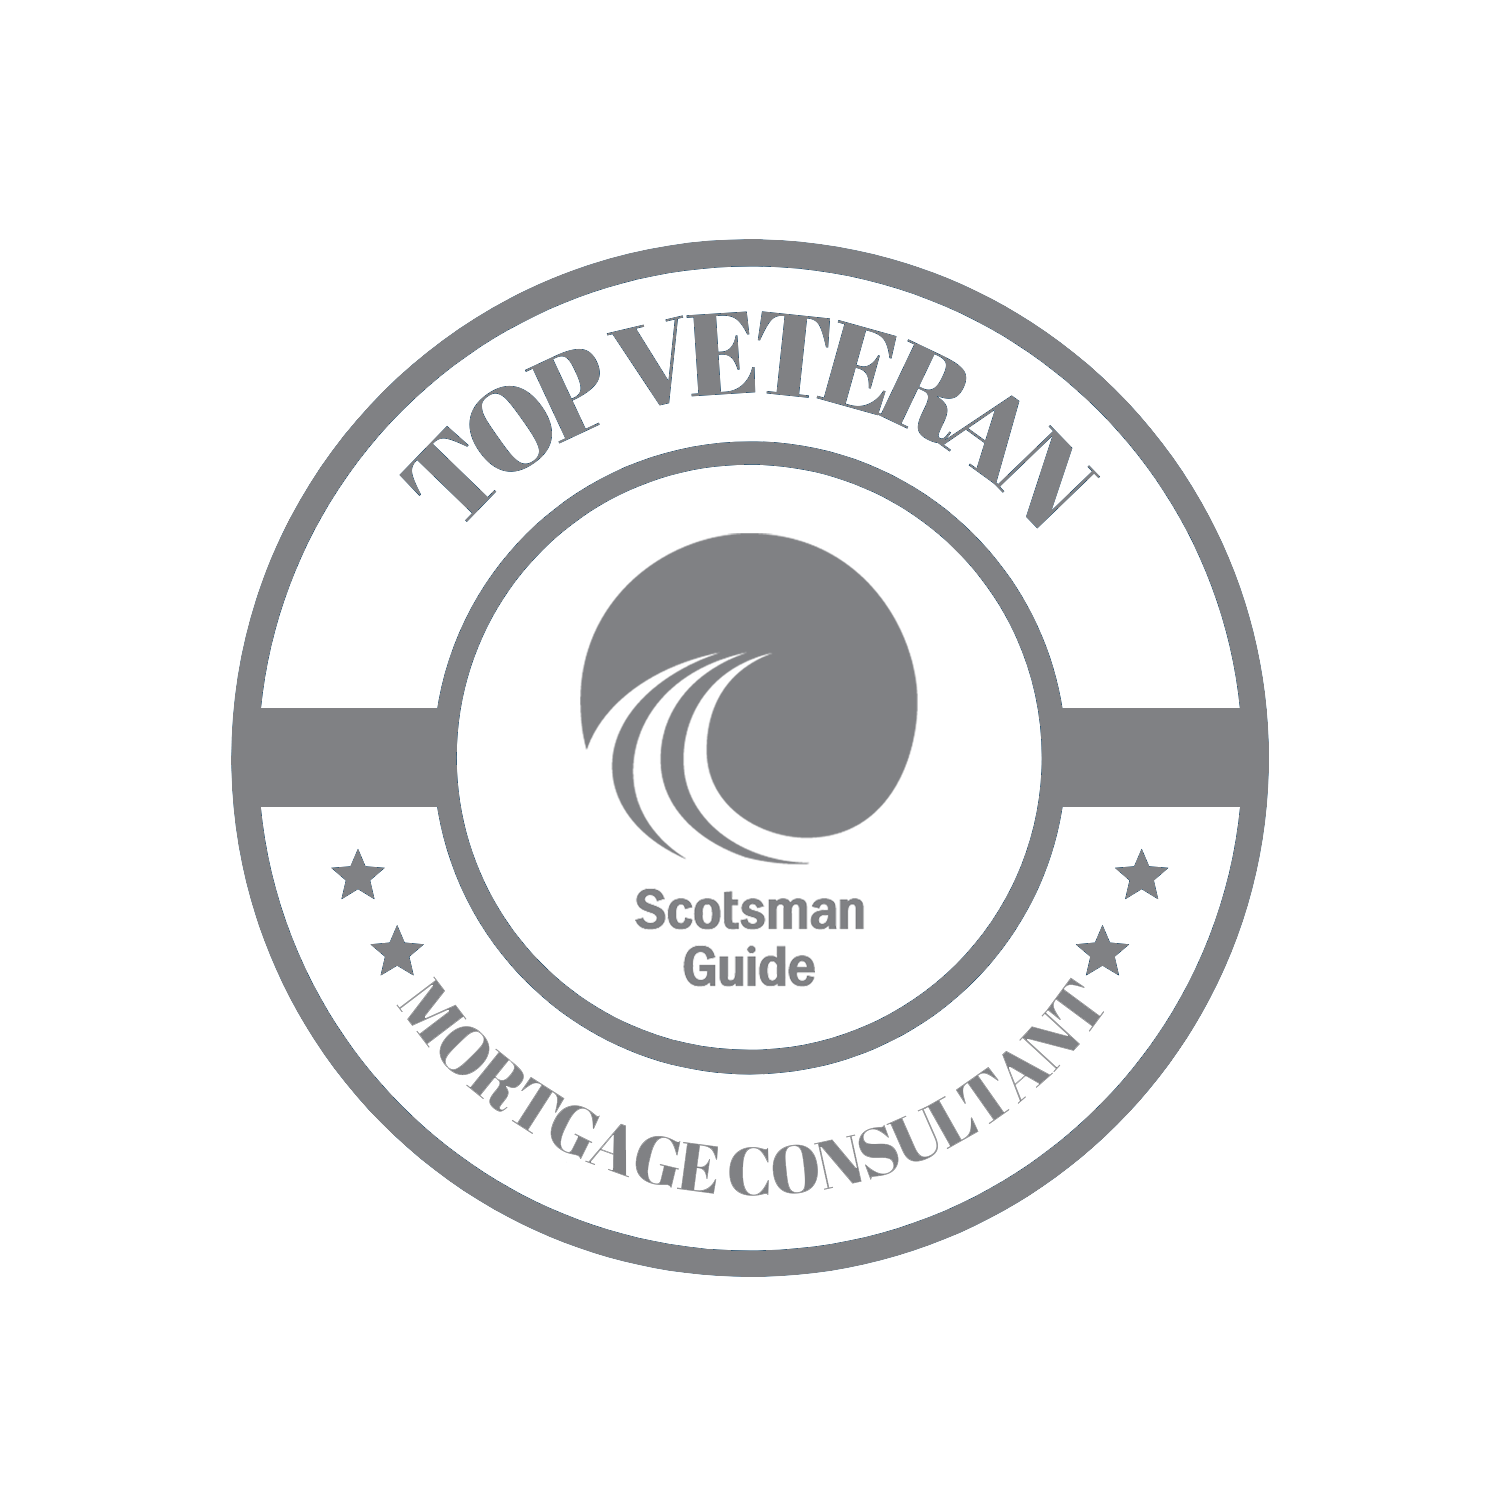 Top Veteran Mortgage Consultant - Scotsman Guide Logo